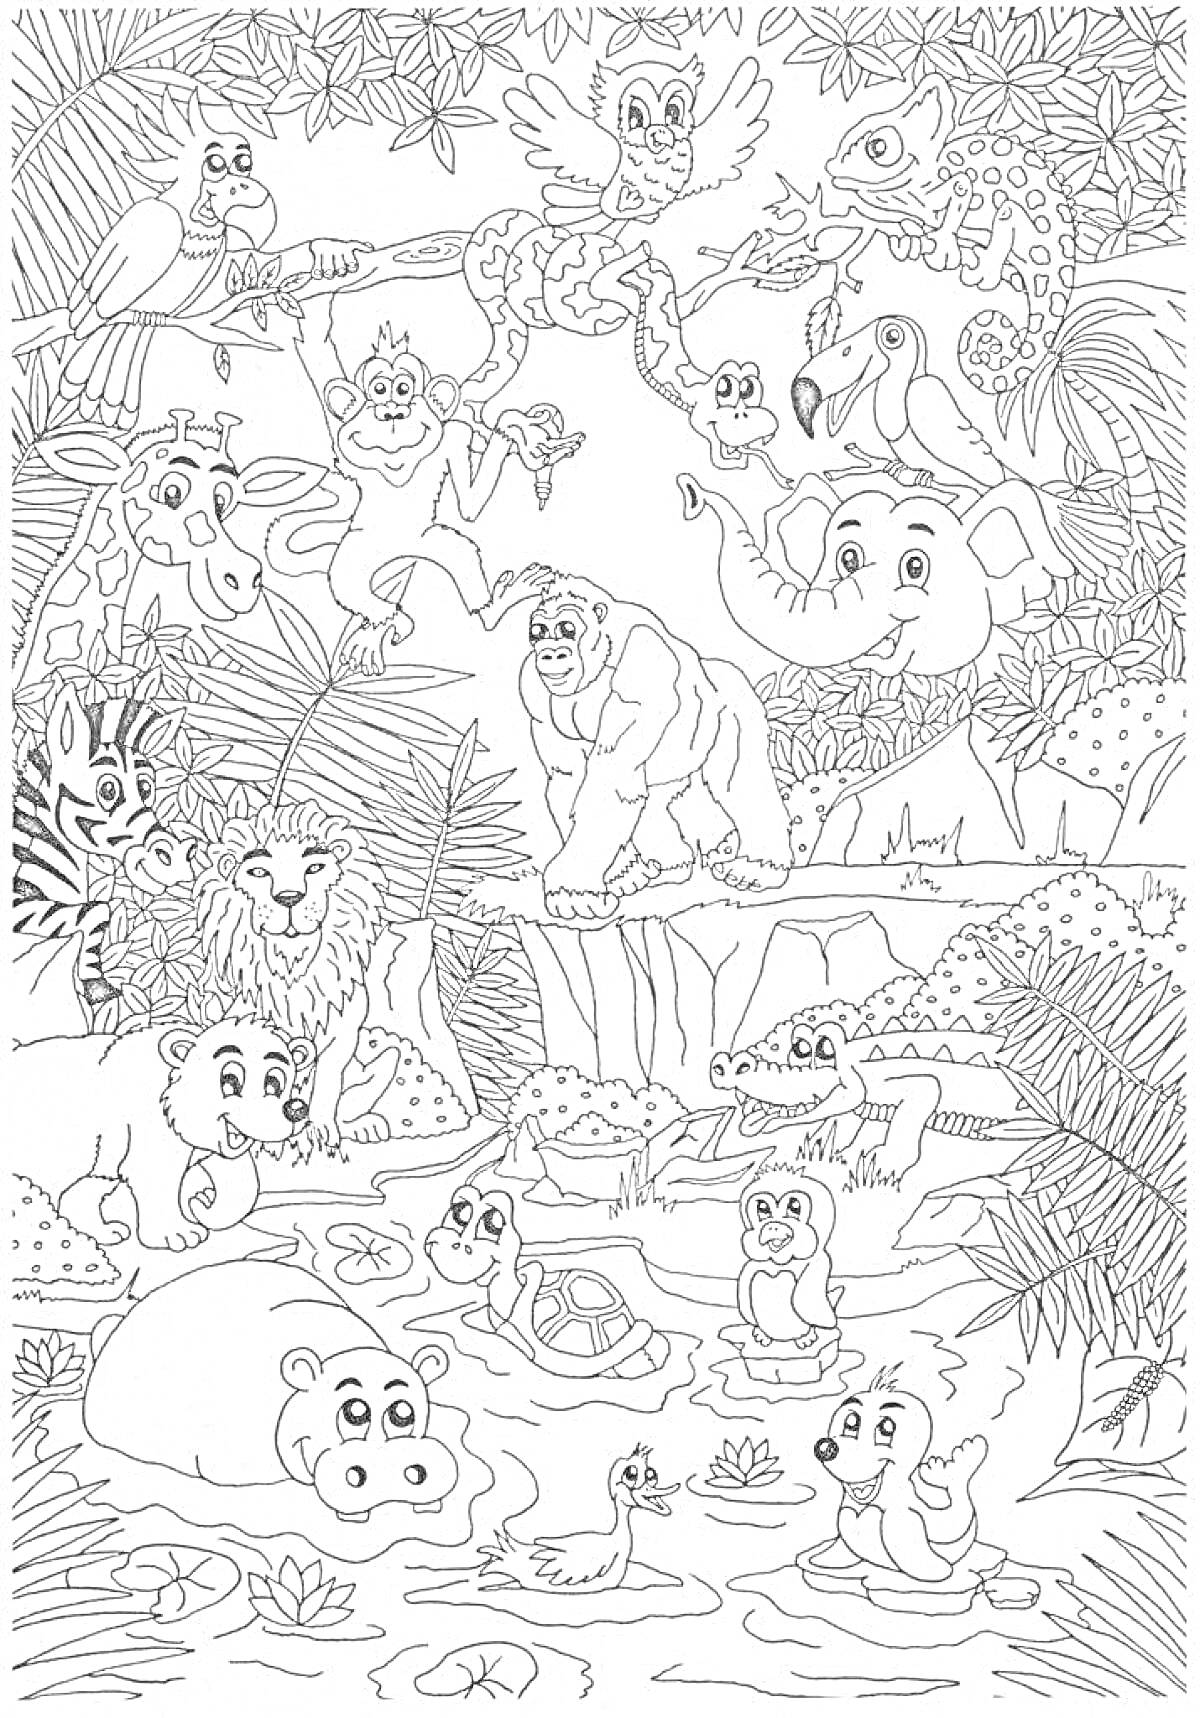 На раскраске изображено: Джунгли, Животные, Птица, Леопард, Бегемот, Черепаха, Утка, Слон, Носорог, Лев, Крокодил